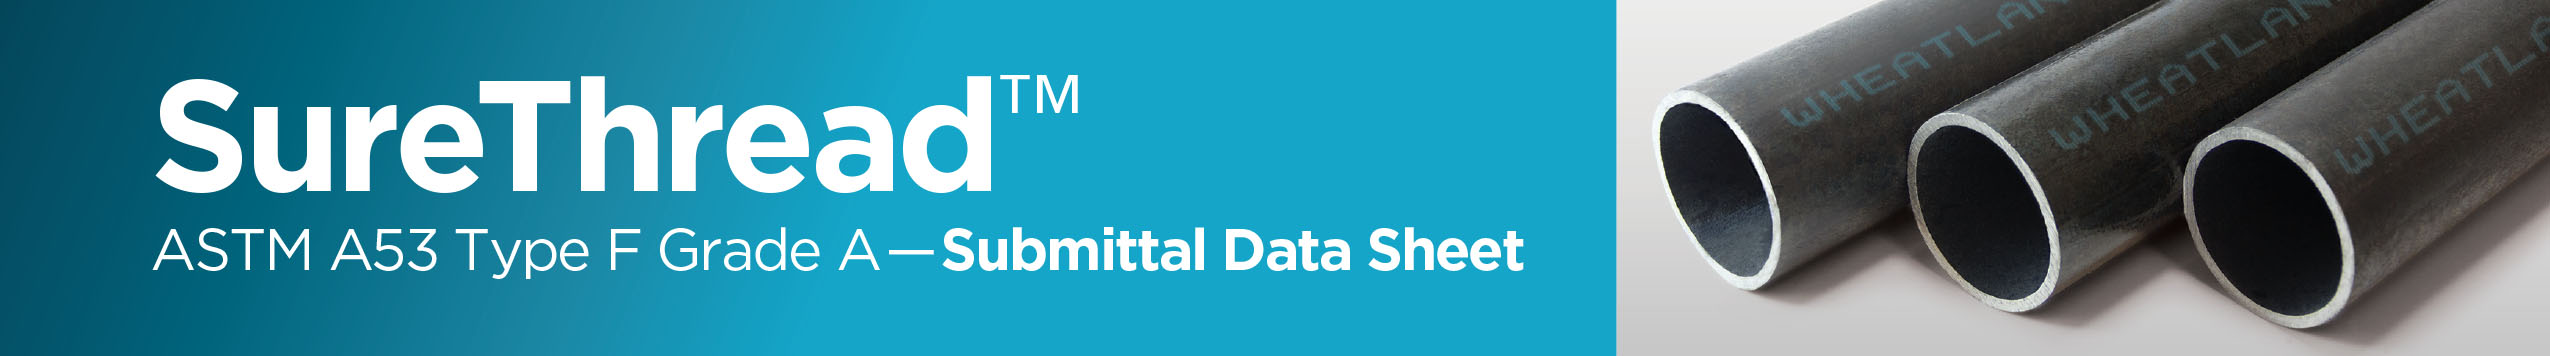 SureThread Data Sheet